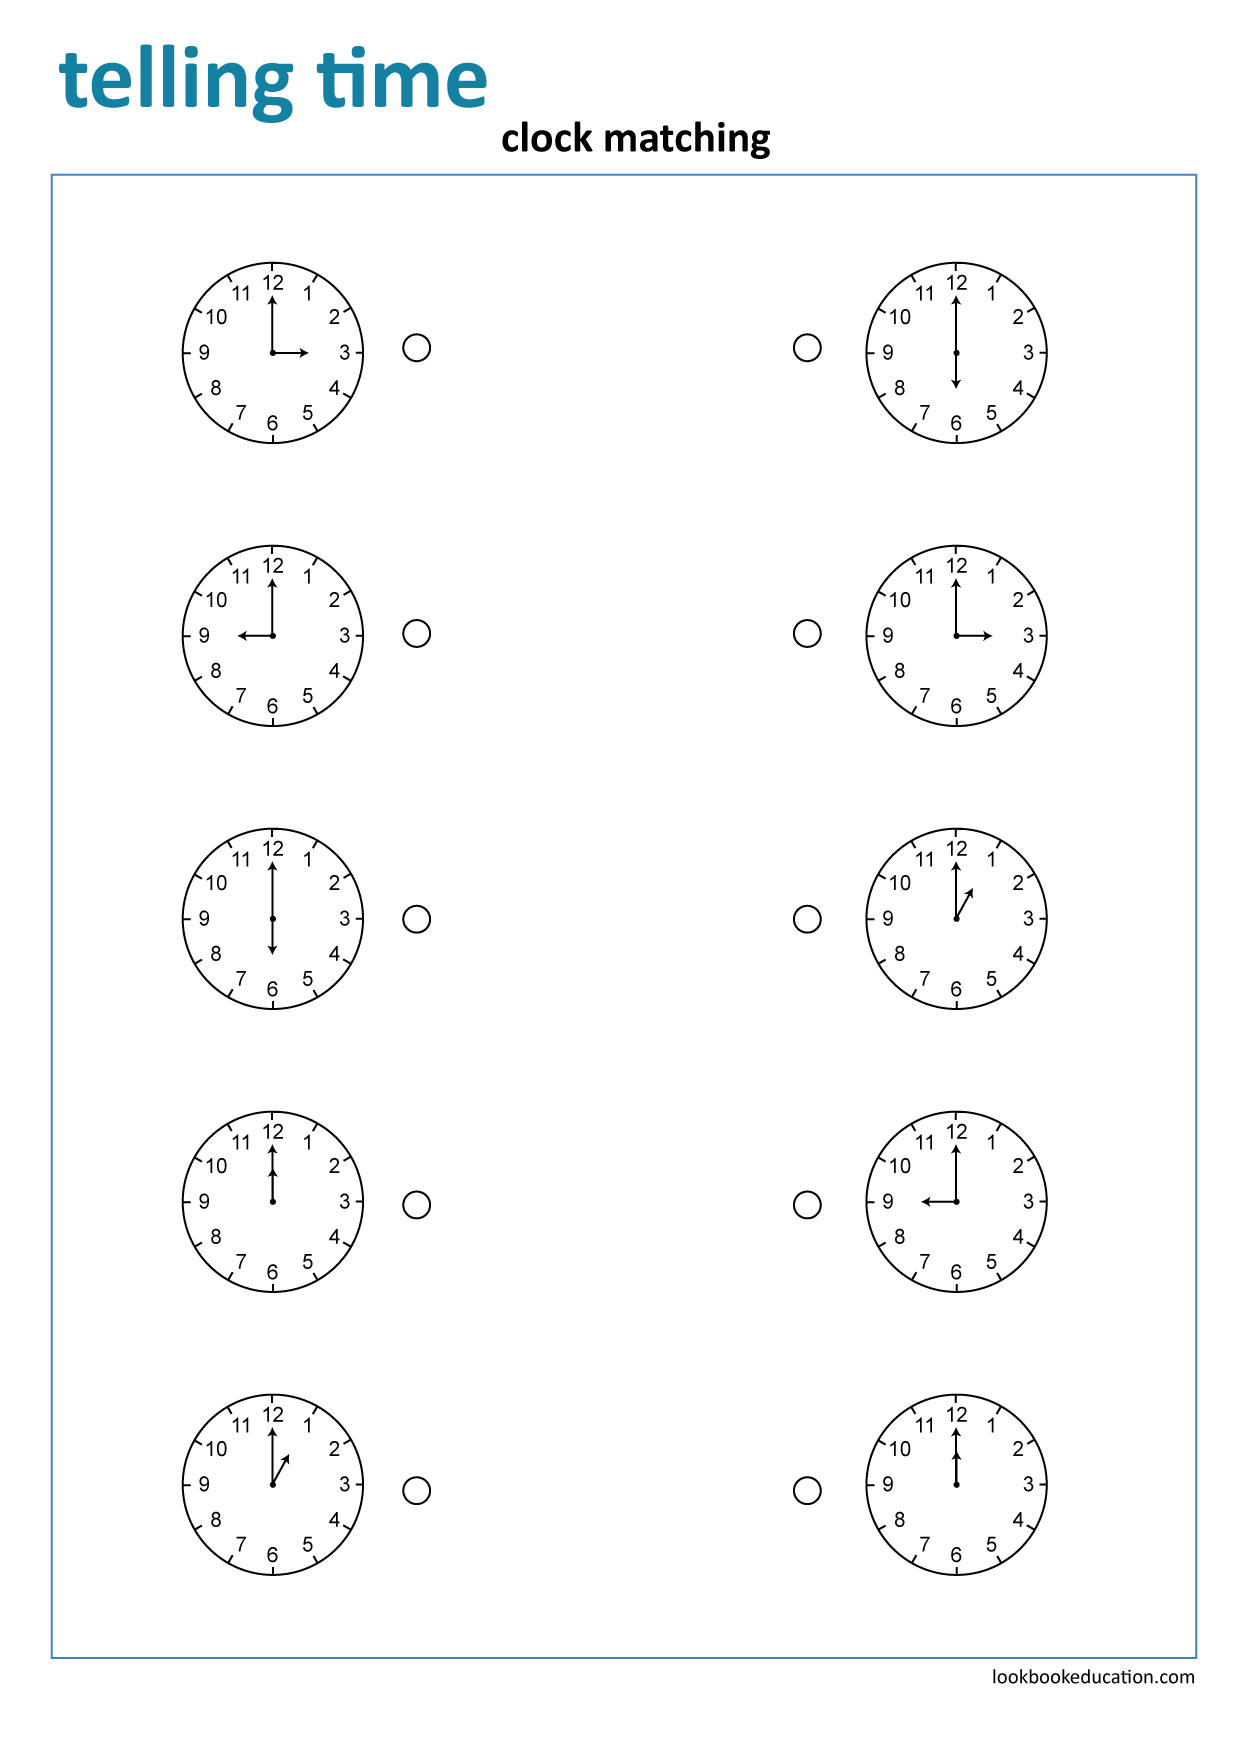 worksheet matching clocks lookbook education